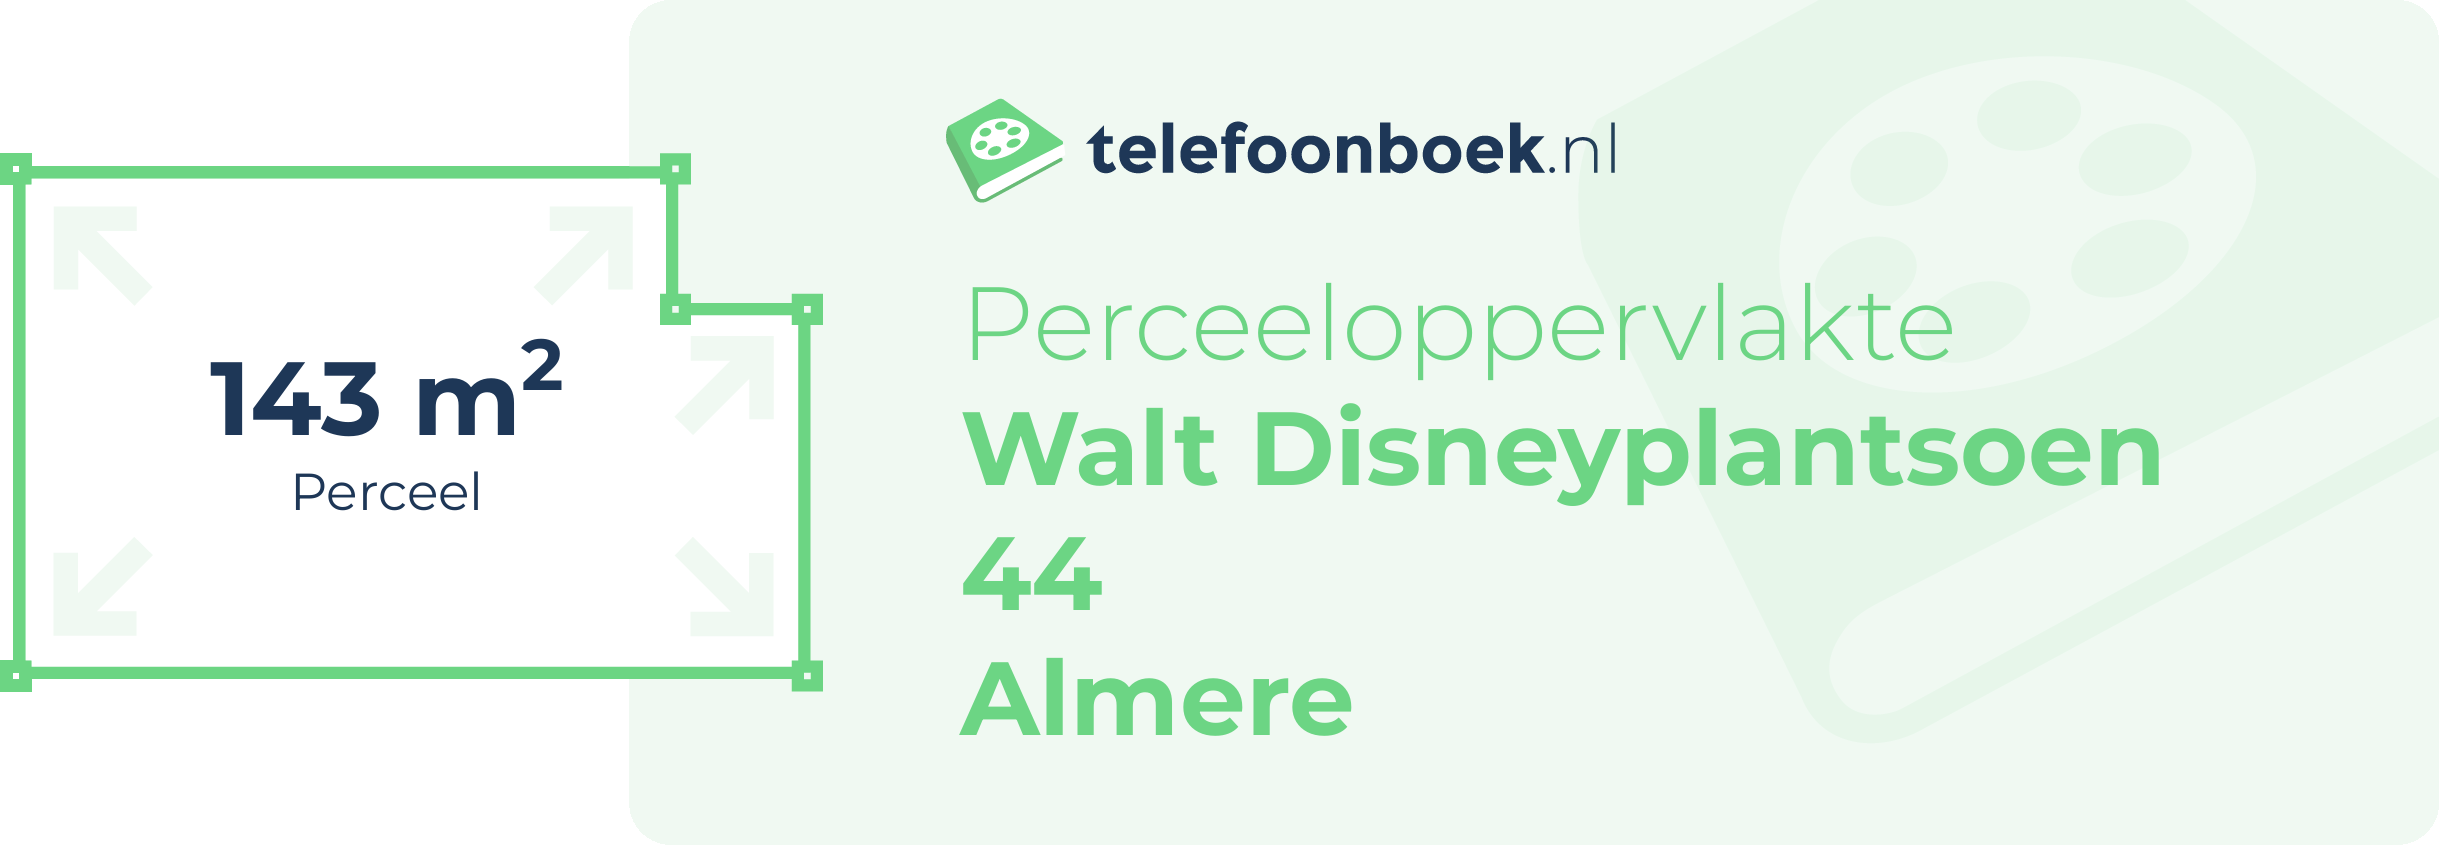 Perceeloppervlakte Walt Disneyplantsoen 44 Almere